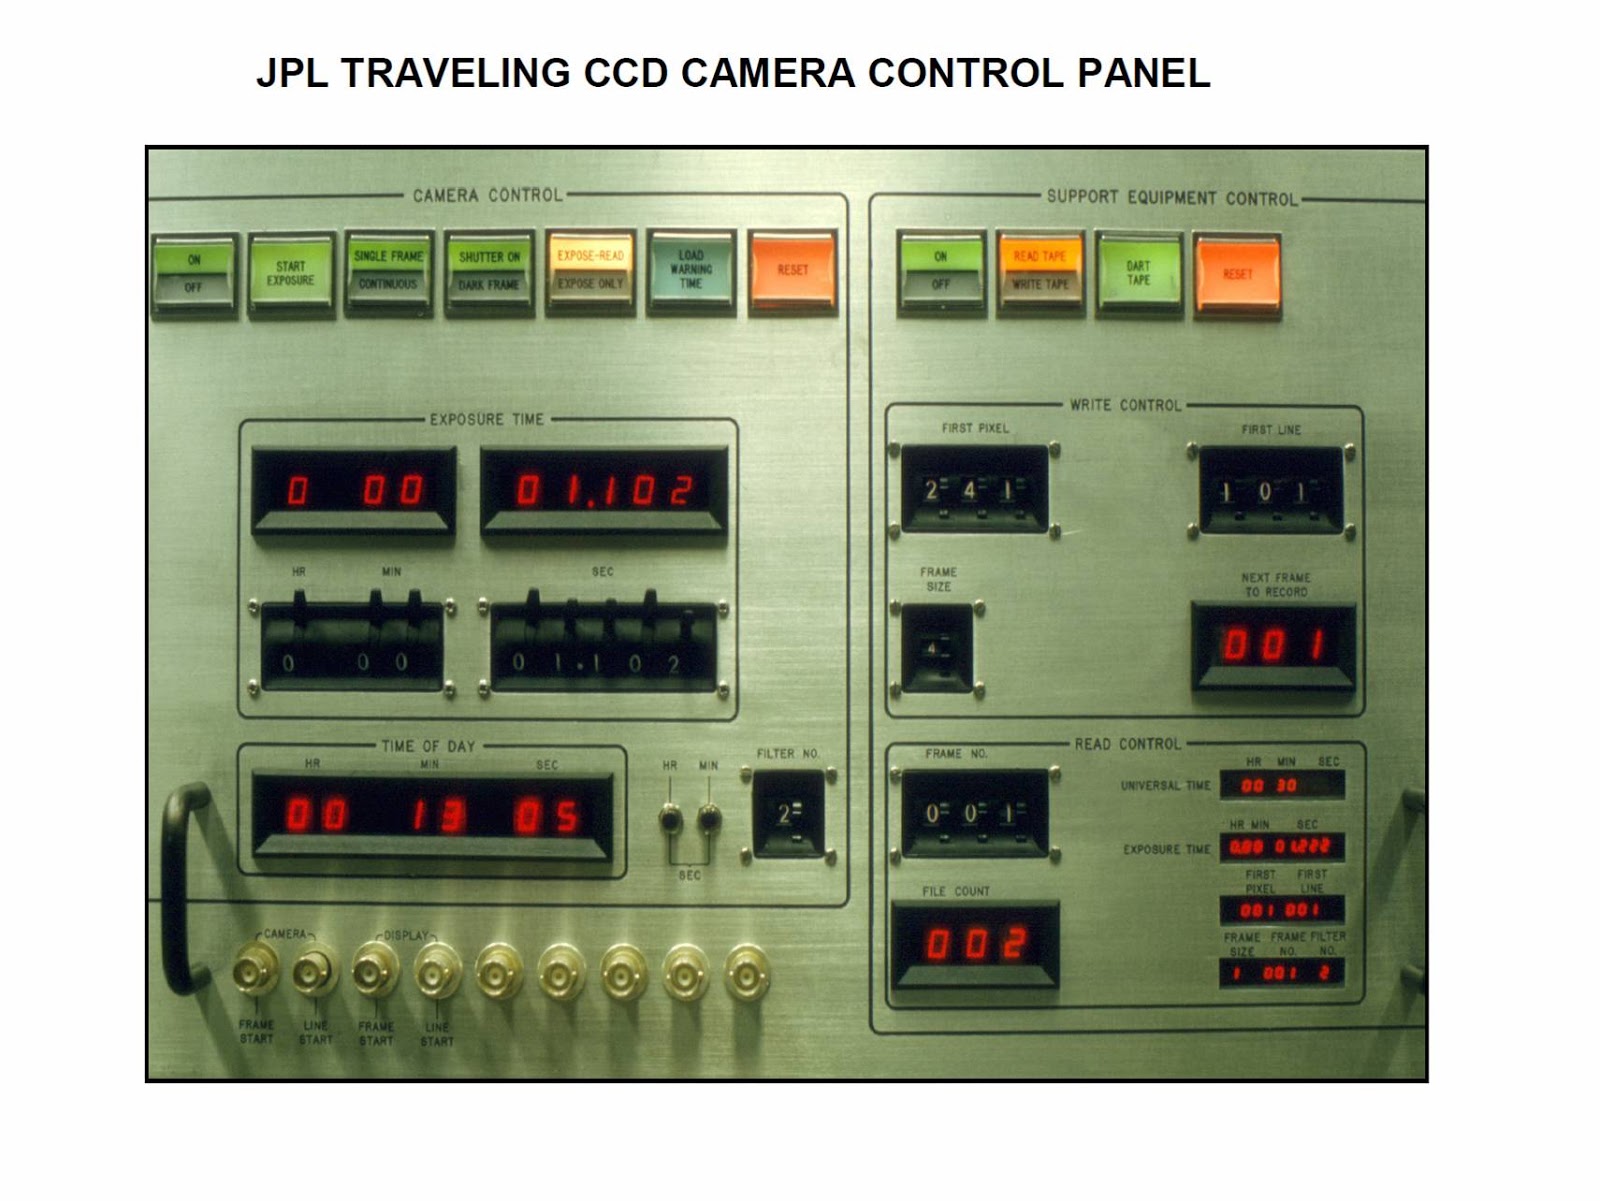 Janesick JPL CCD traveling camera system control panel